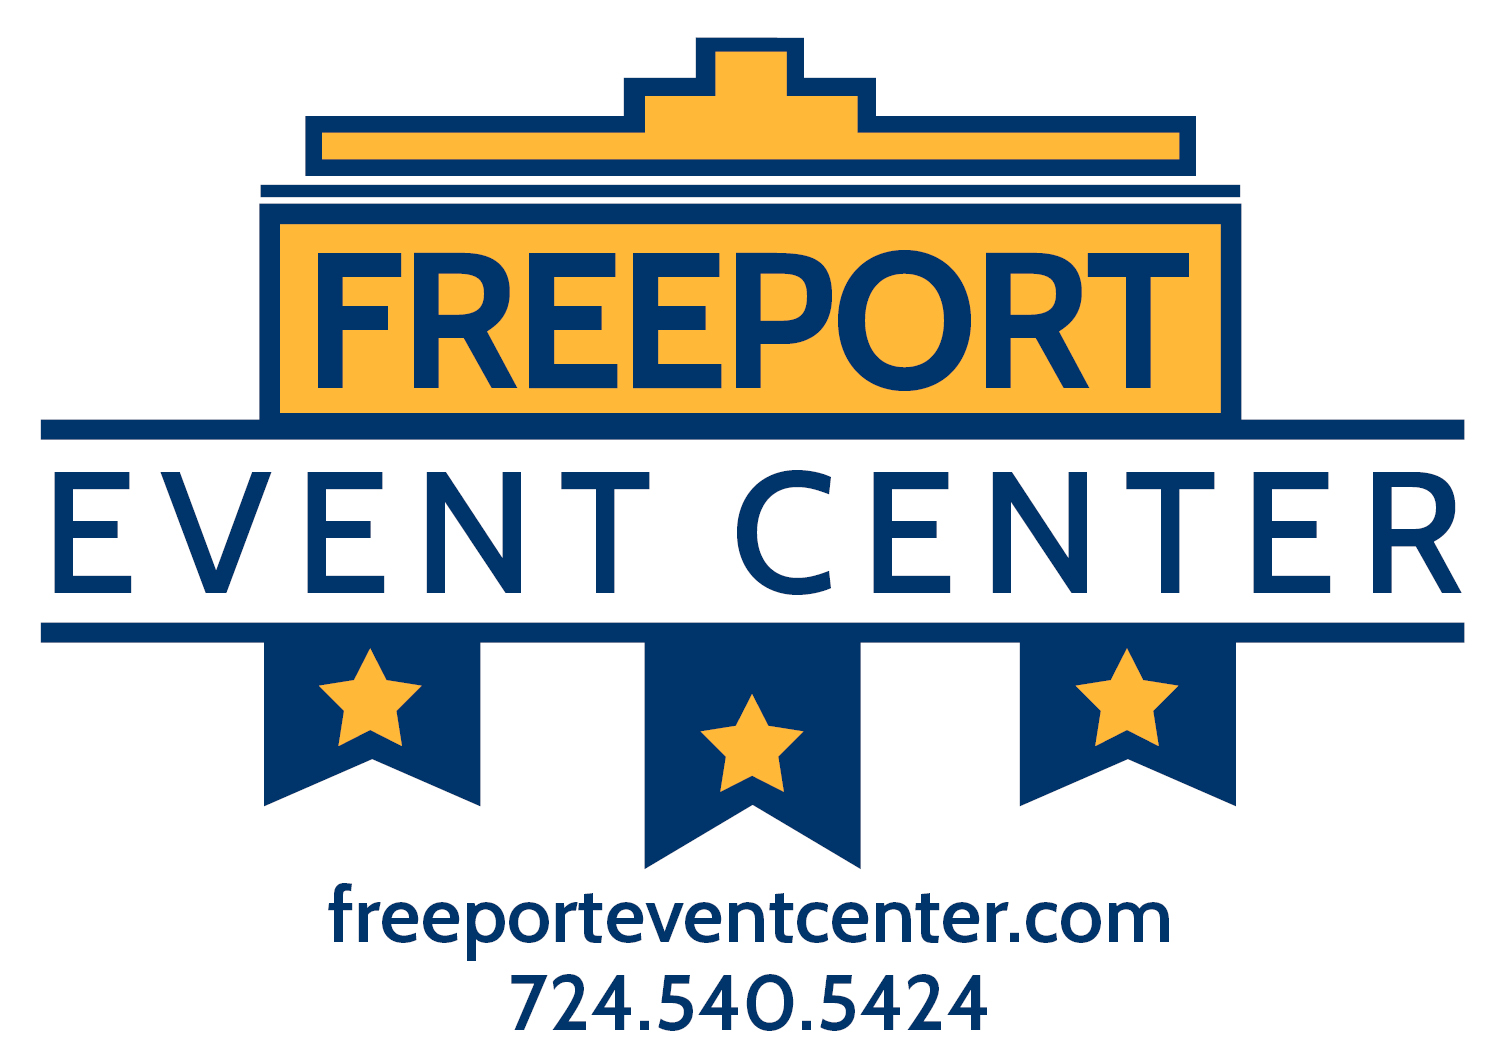 Freeport Event Center